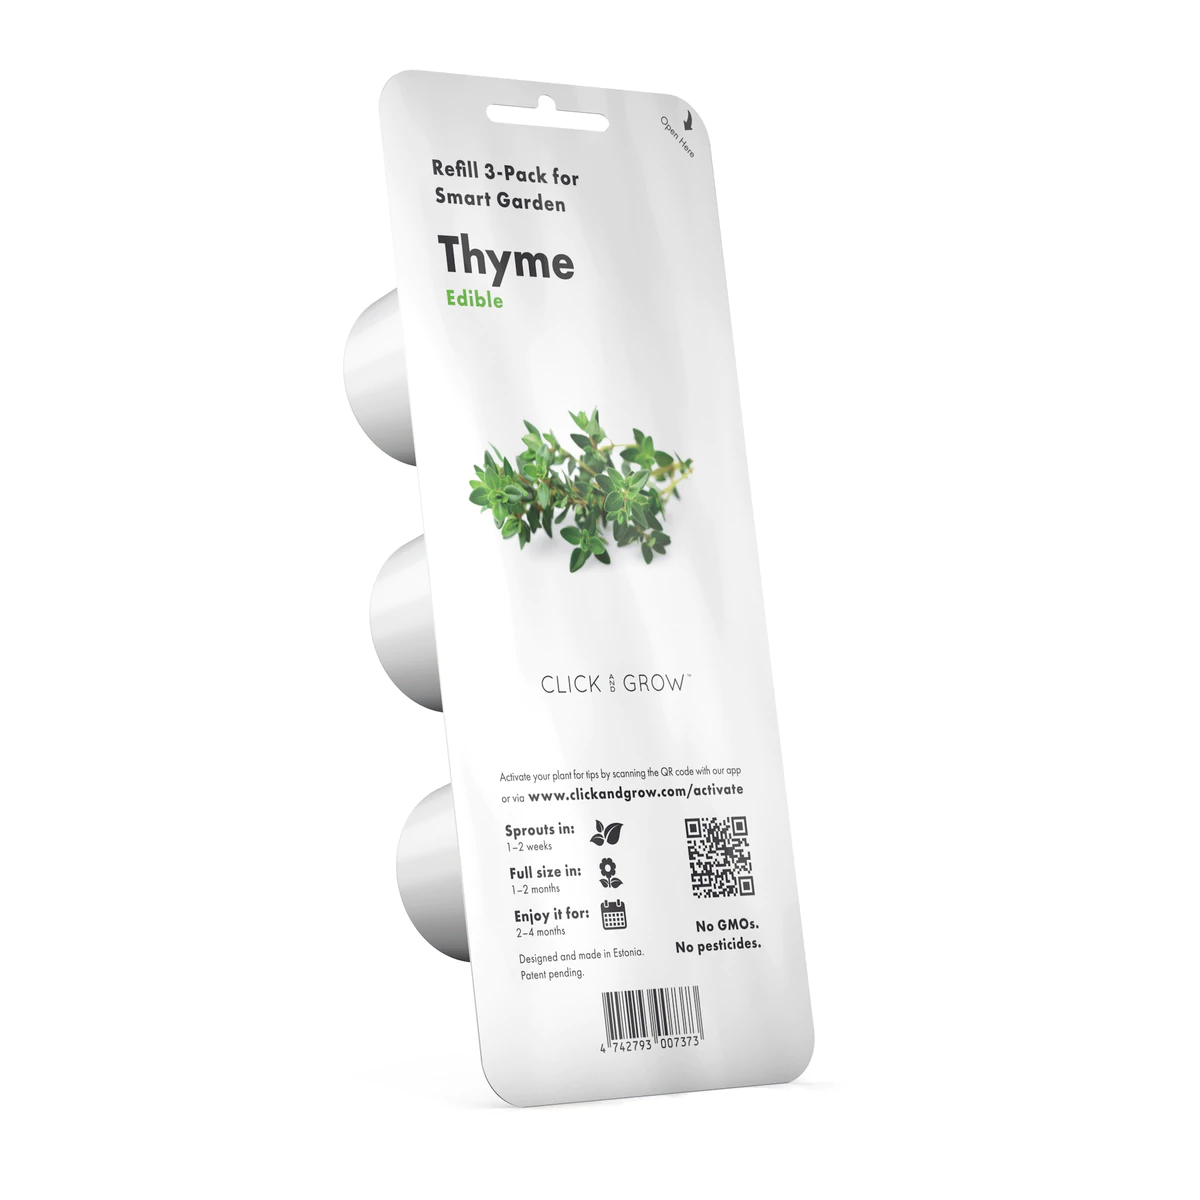 Thyme Plant Pods for Smart Garden